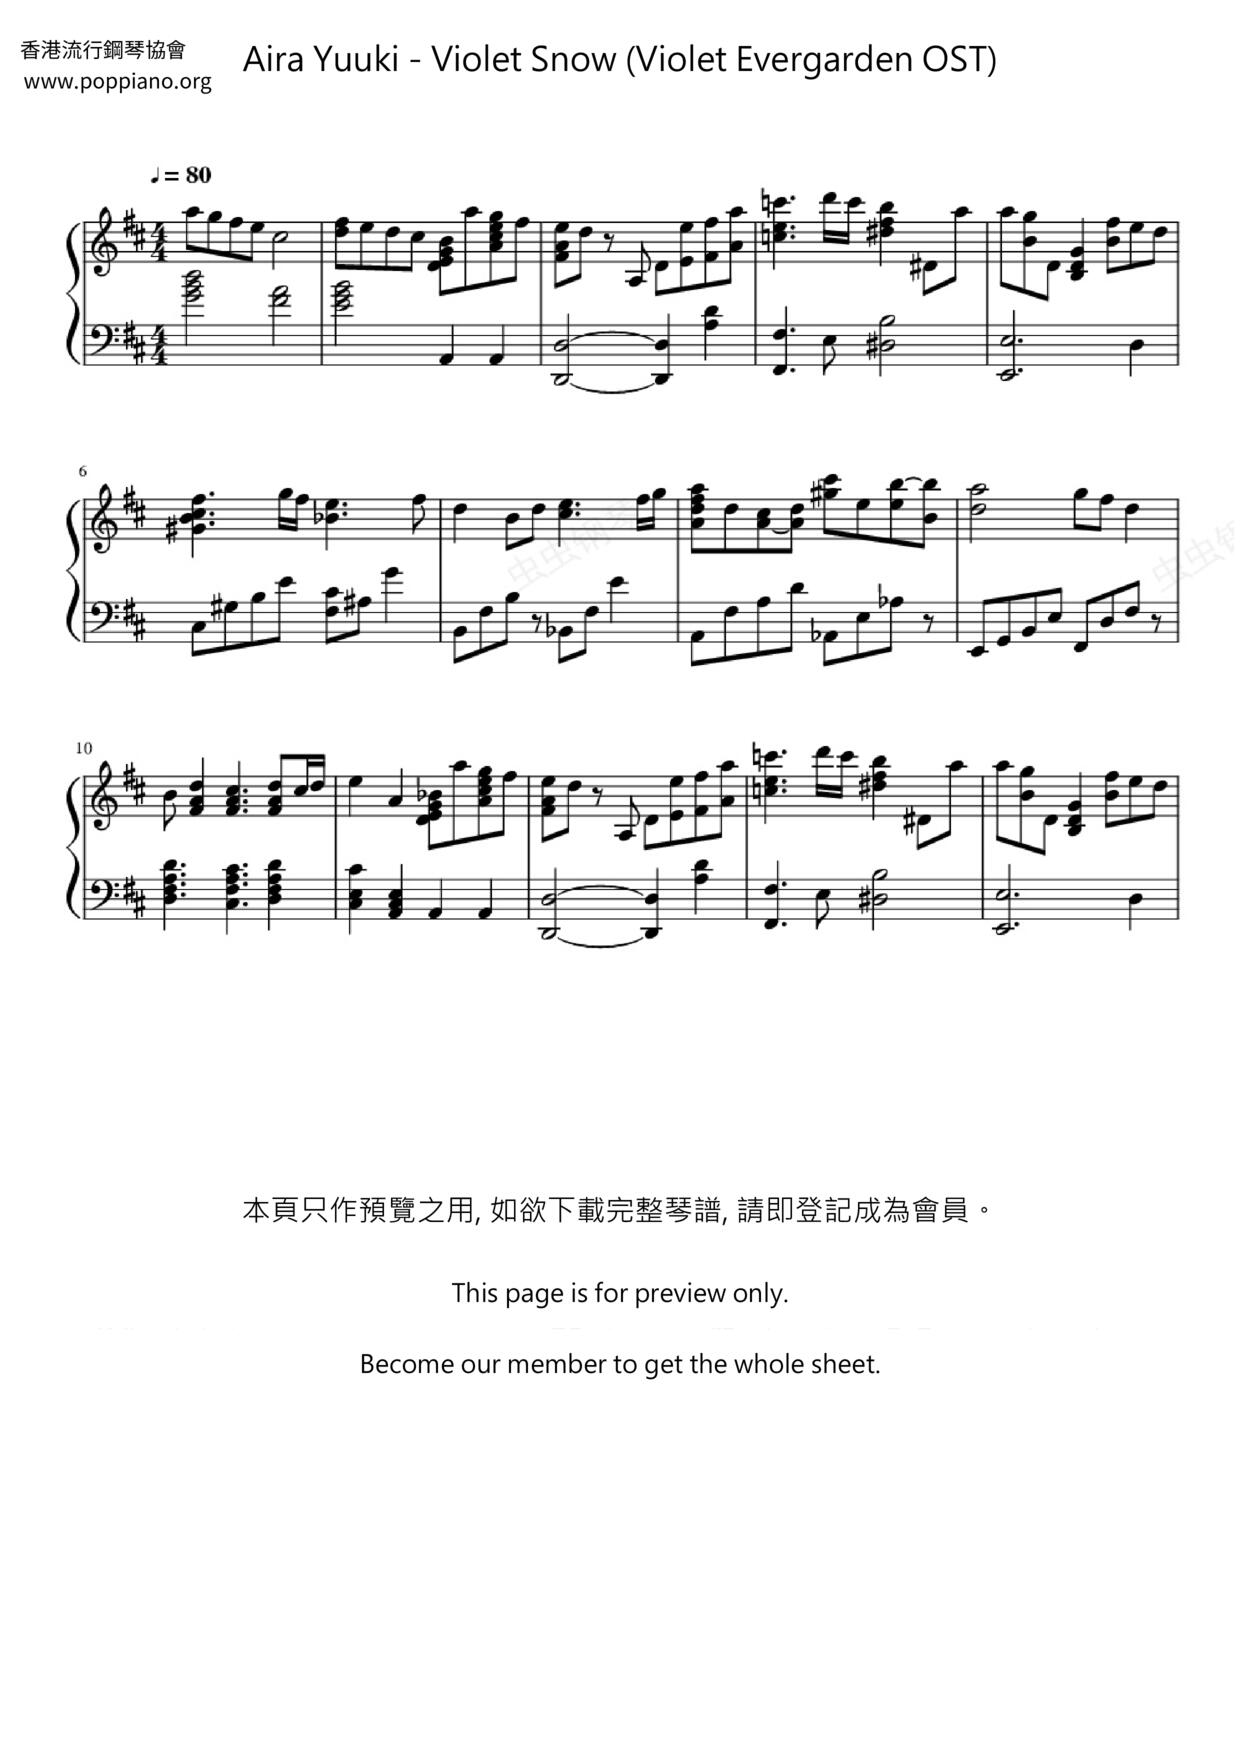 Violet Snow (Violet Evergarden OST)ピアノ譜